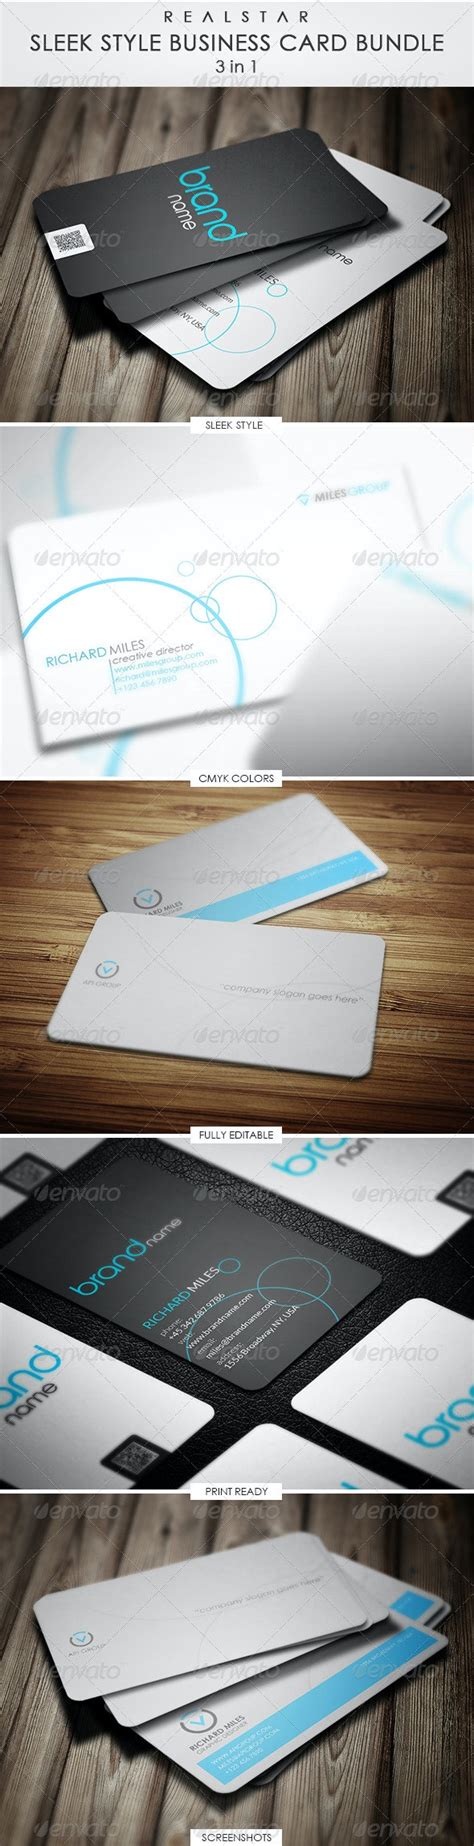 Sleek Business Card Bundle By Realstar Graphicriver